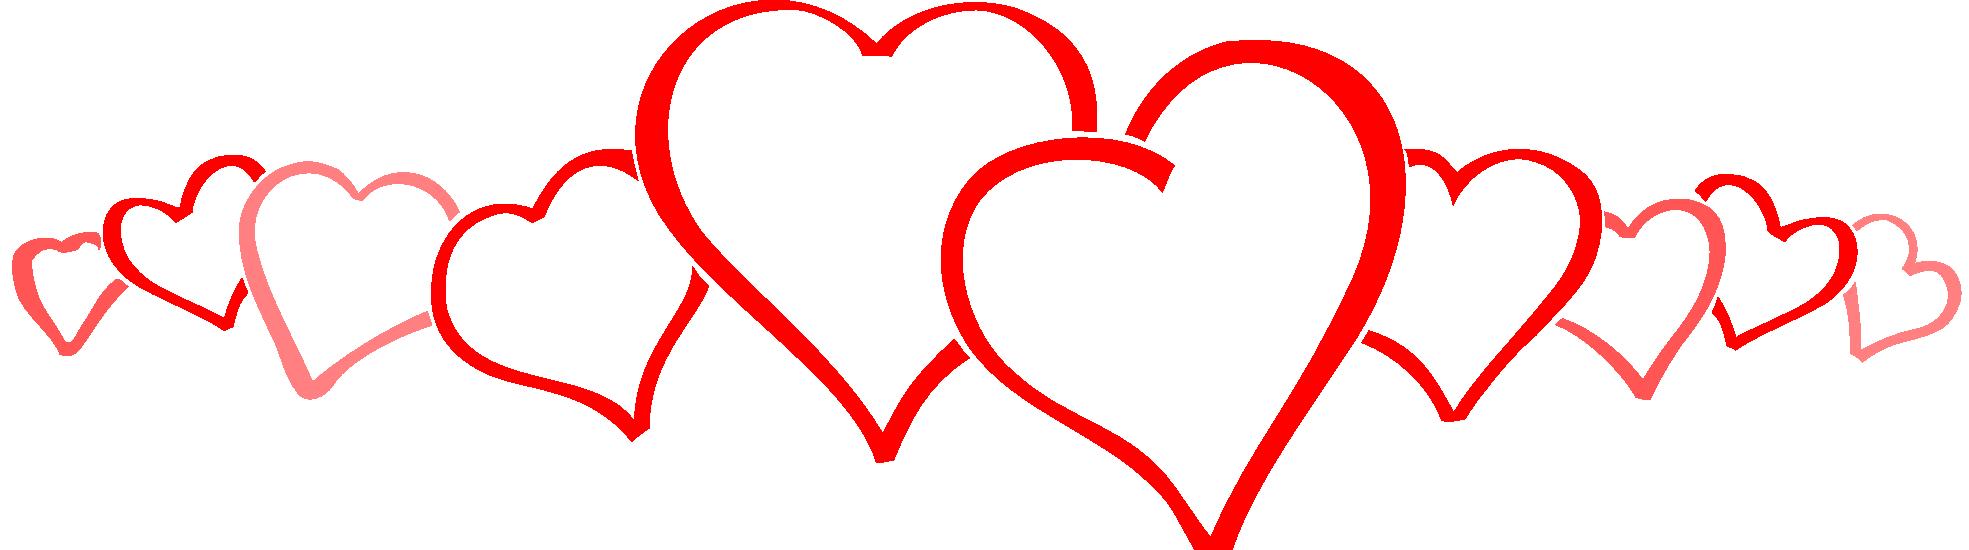 heart borders clip art